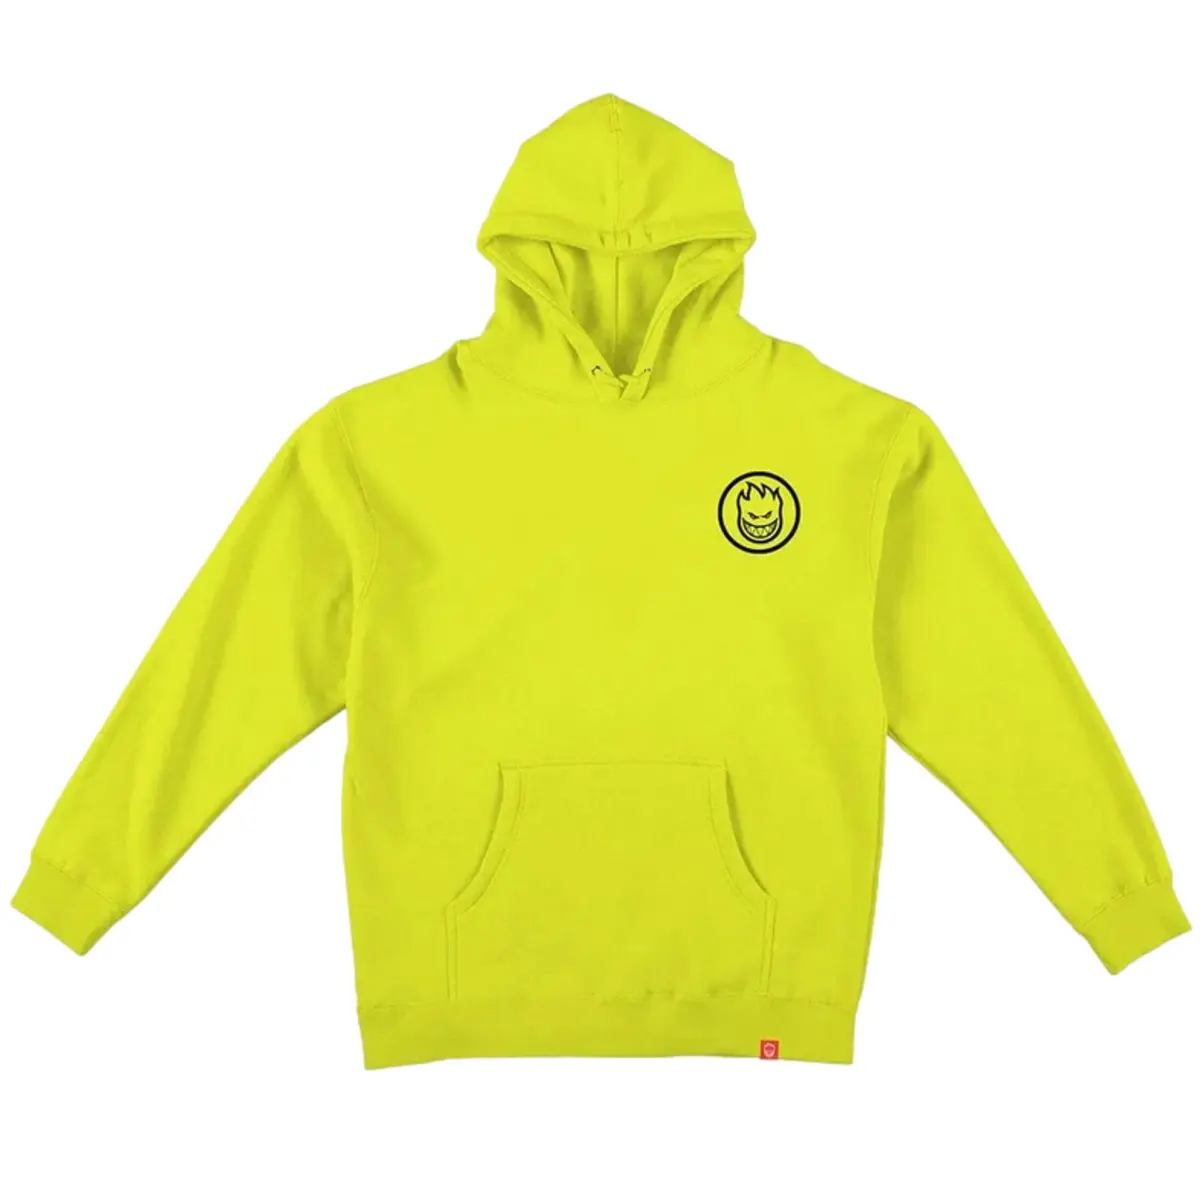 Spitfire swirled classic hoodie yellow fluo